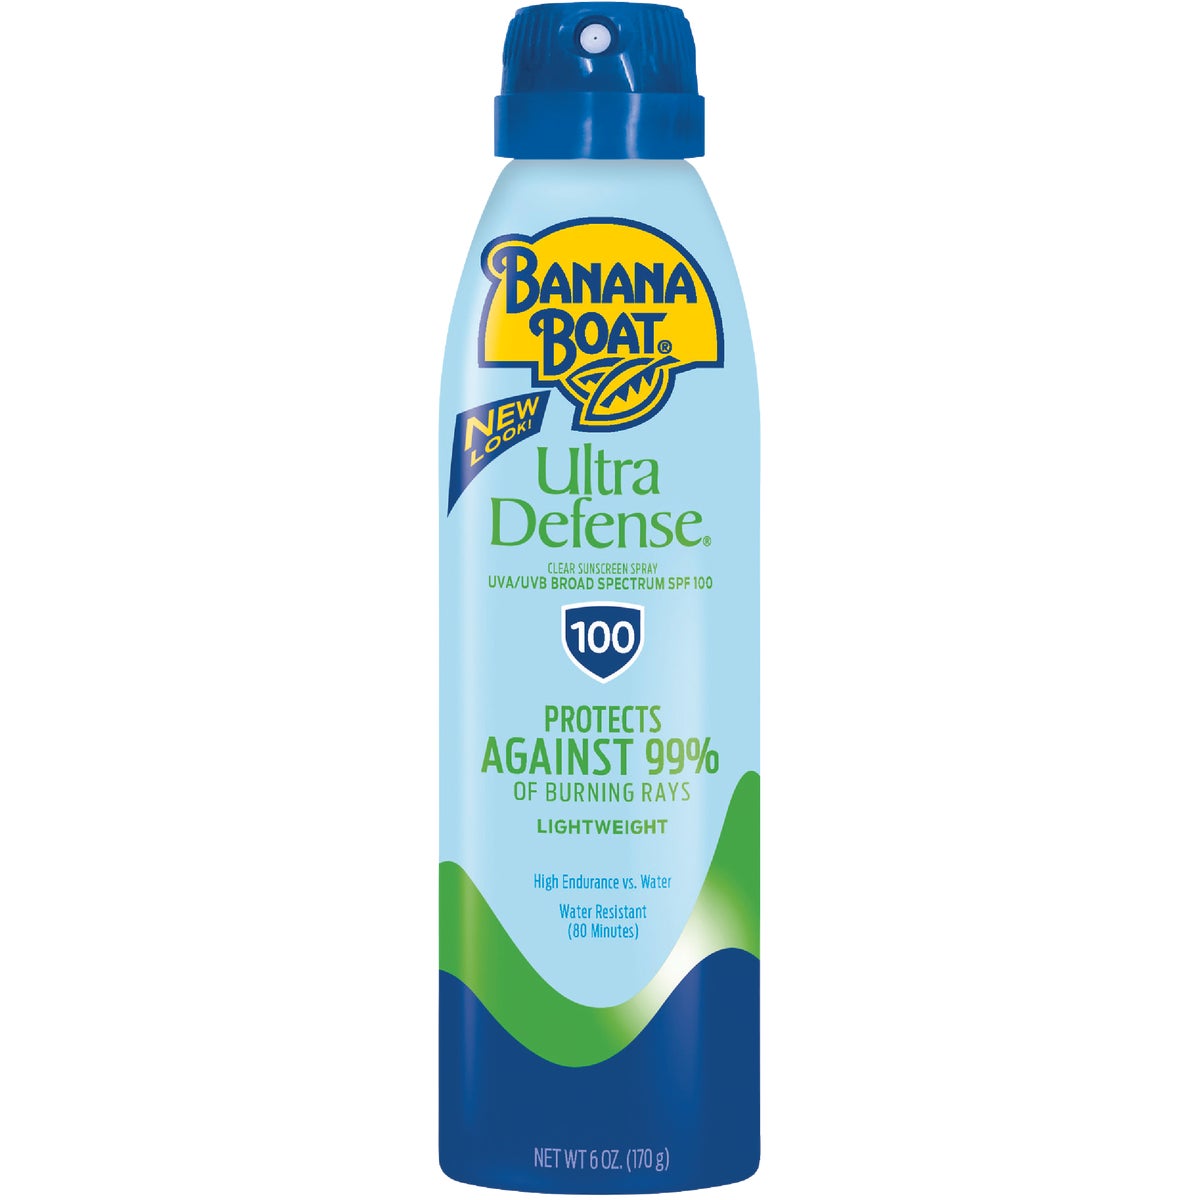 Banana Boat Ultra Defense SPF 100 Defense Sunscreen Spray